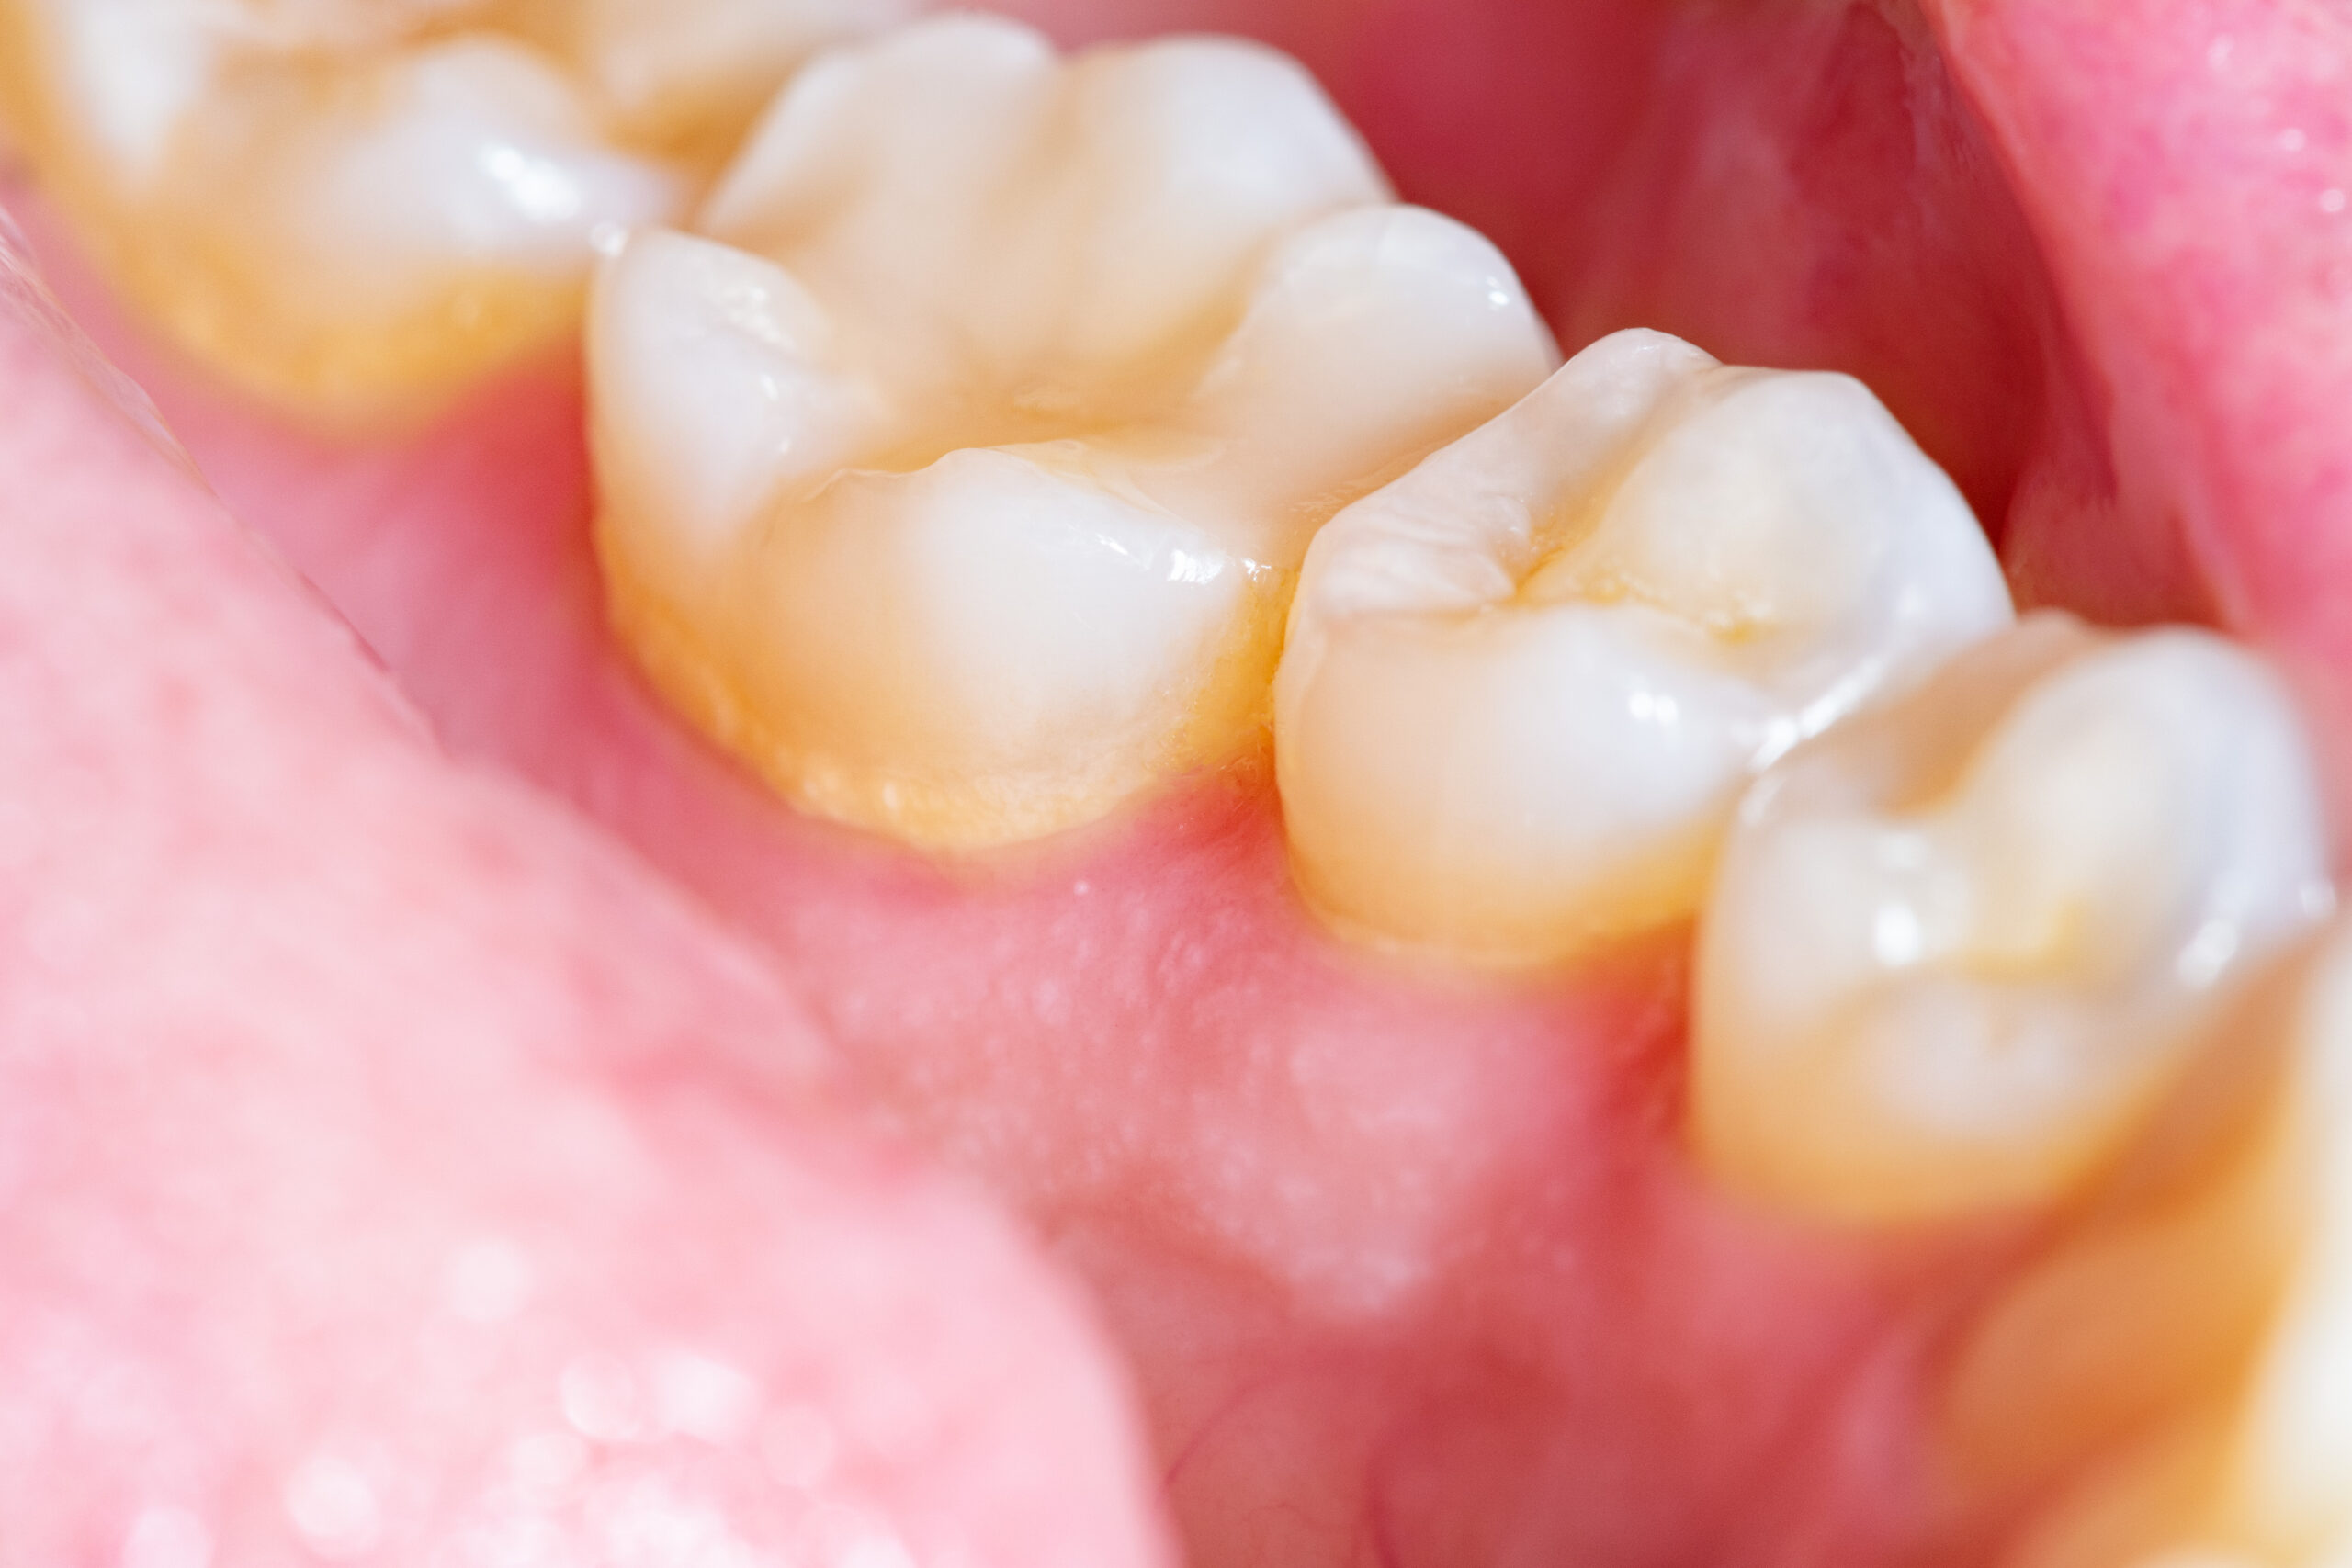 Poor oral health causes